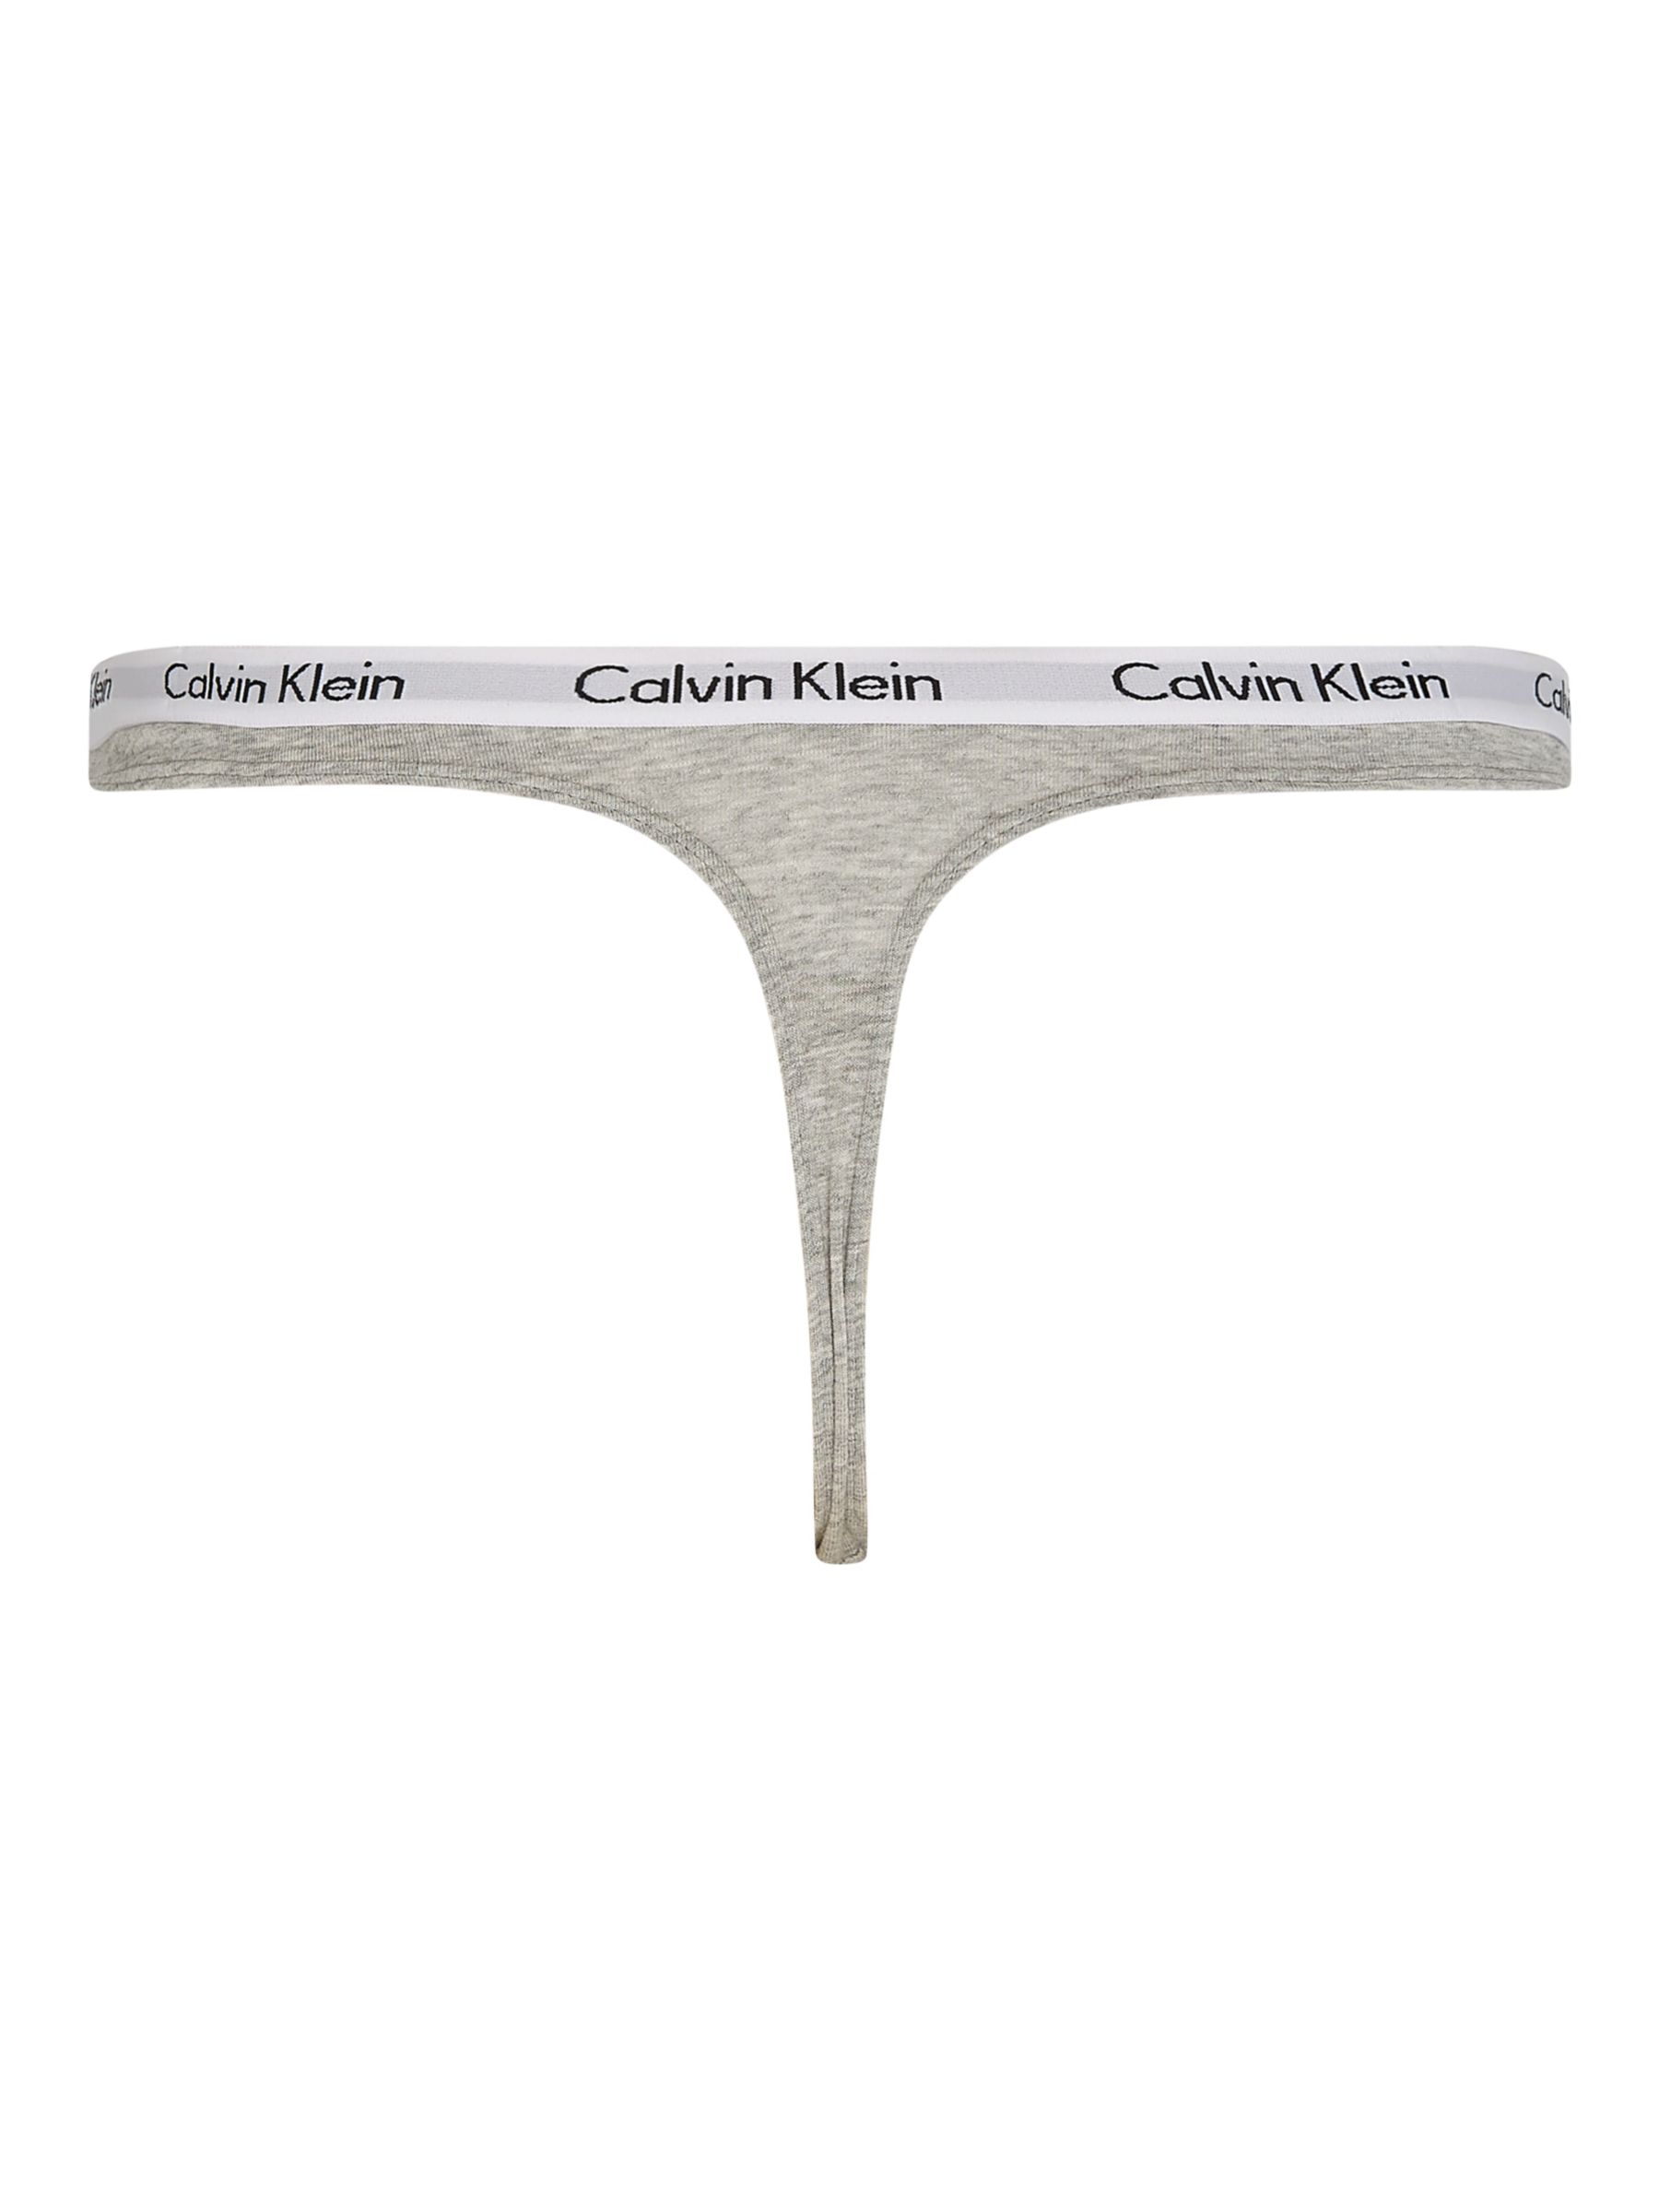 Calvin Klein - CAROUSEL THONG in Grey Heather